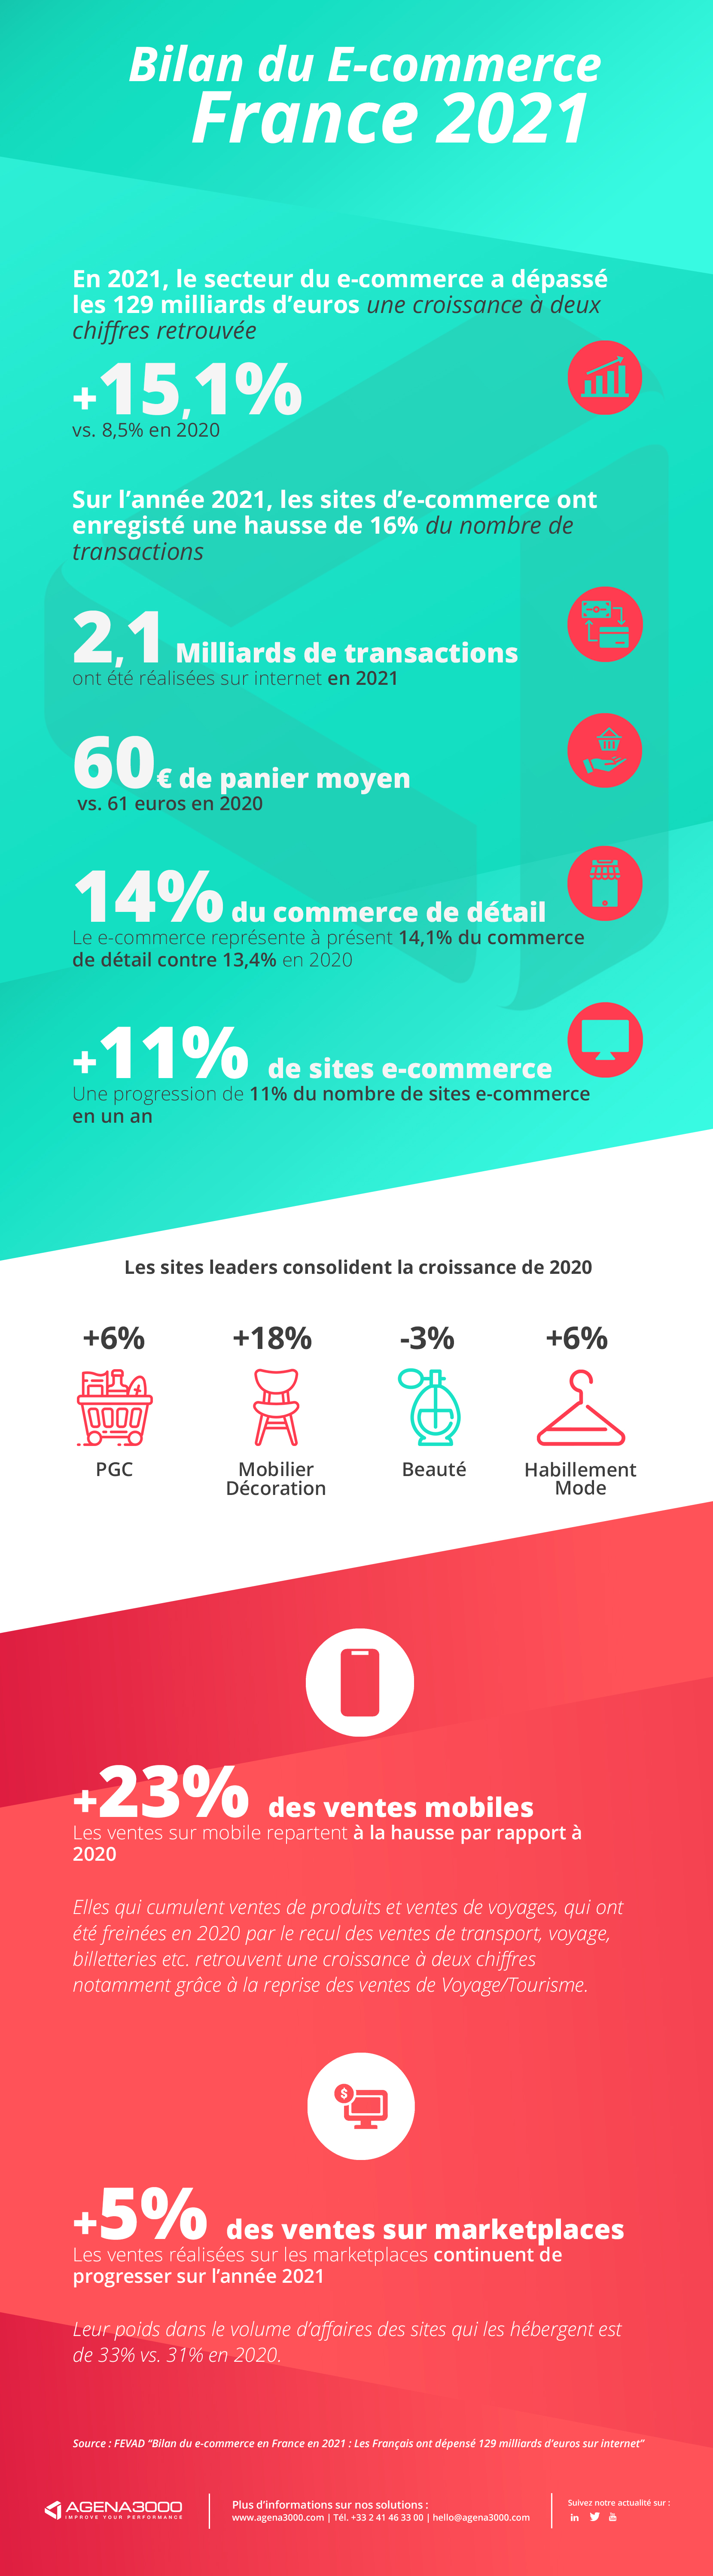 Bilan du e-commerce France 2021